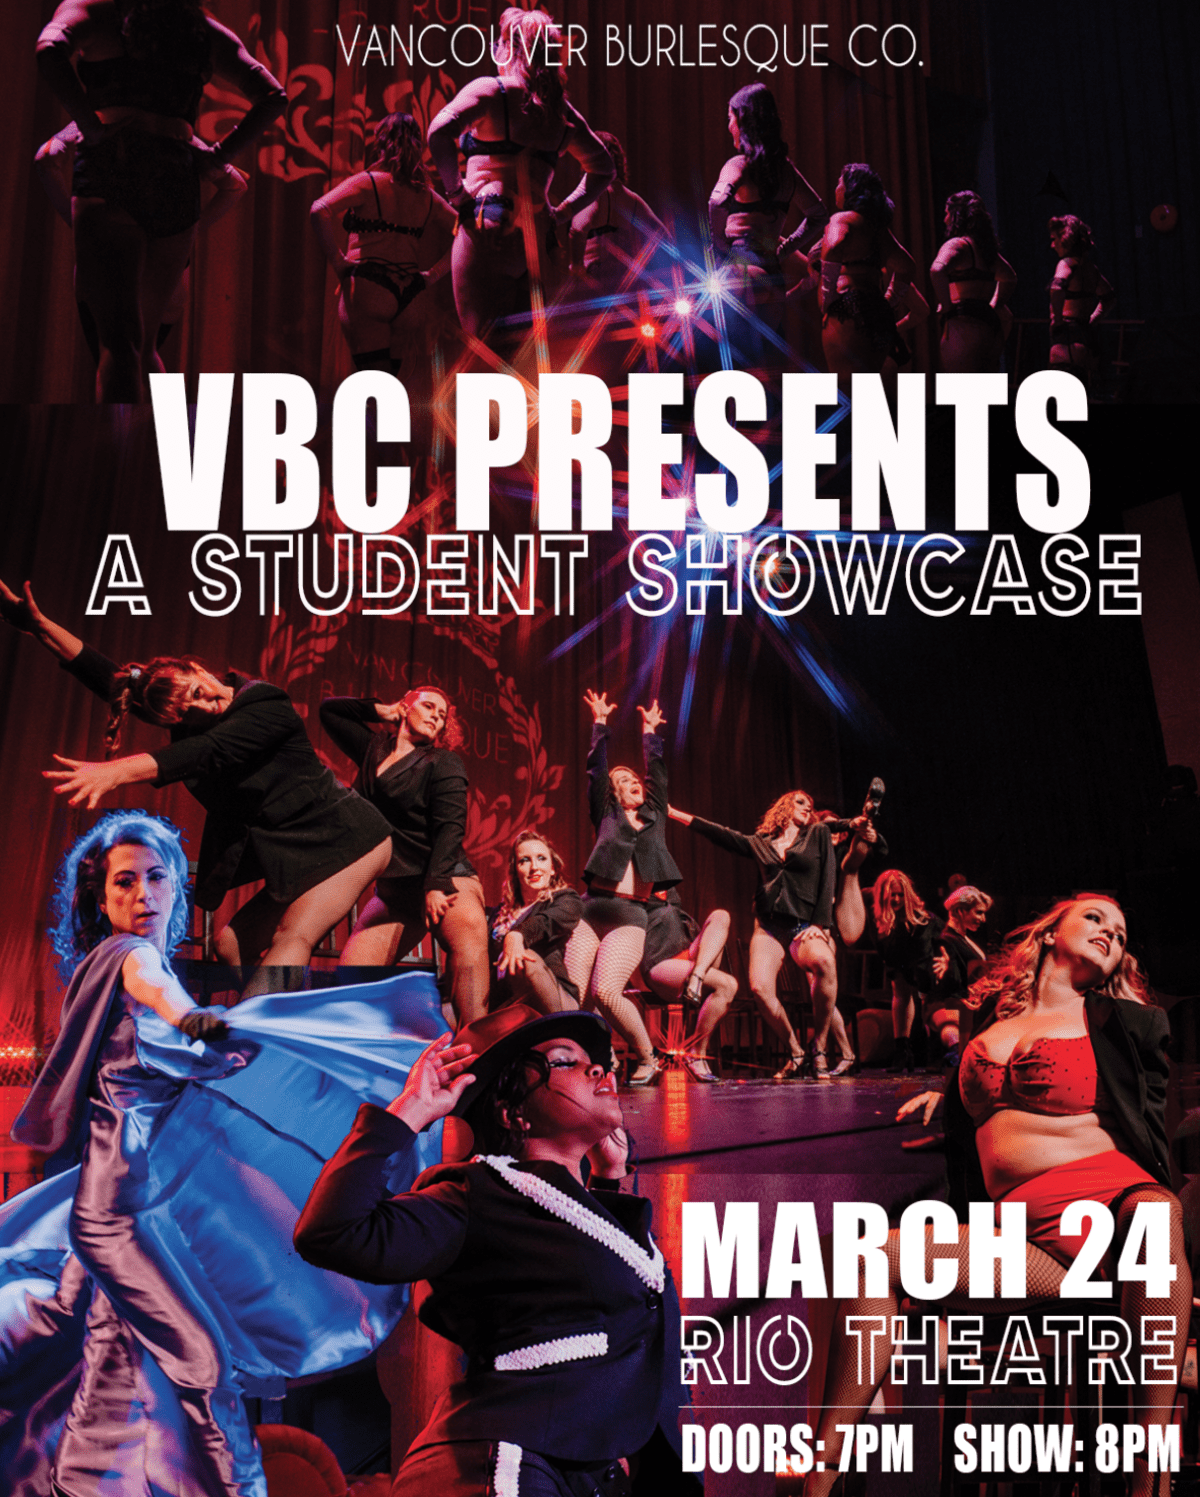 Vancouver Burlesque Co. Presents: Spring Student Showcase